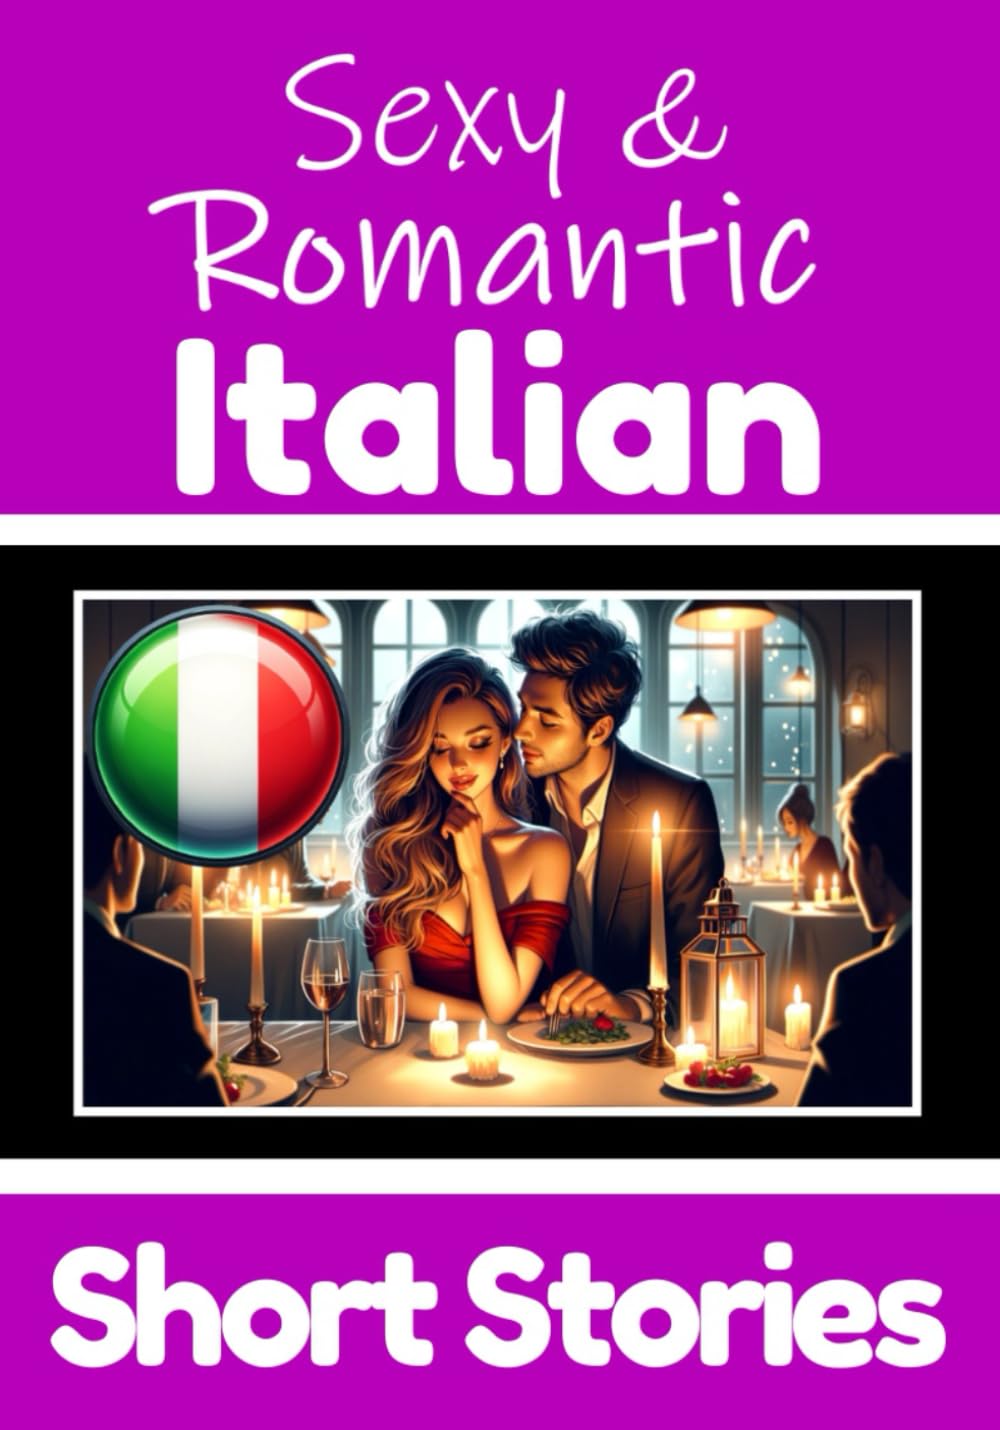 50 Sexy & Romantic Short Stories in Italian